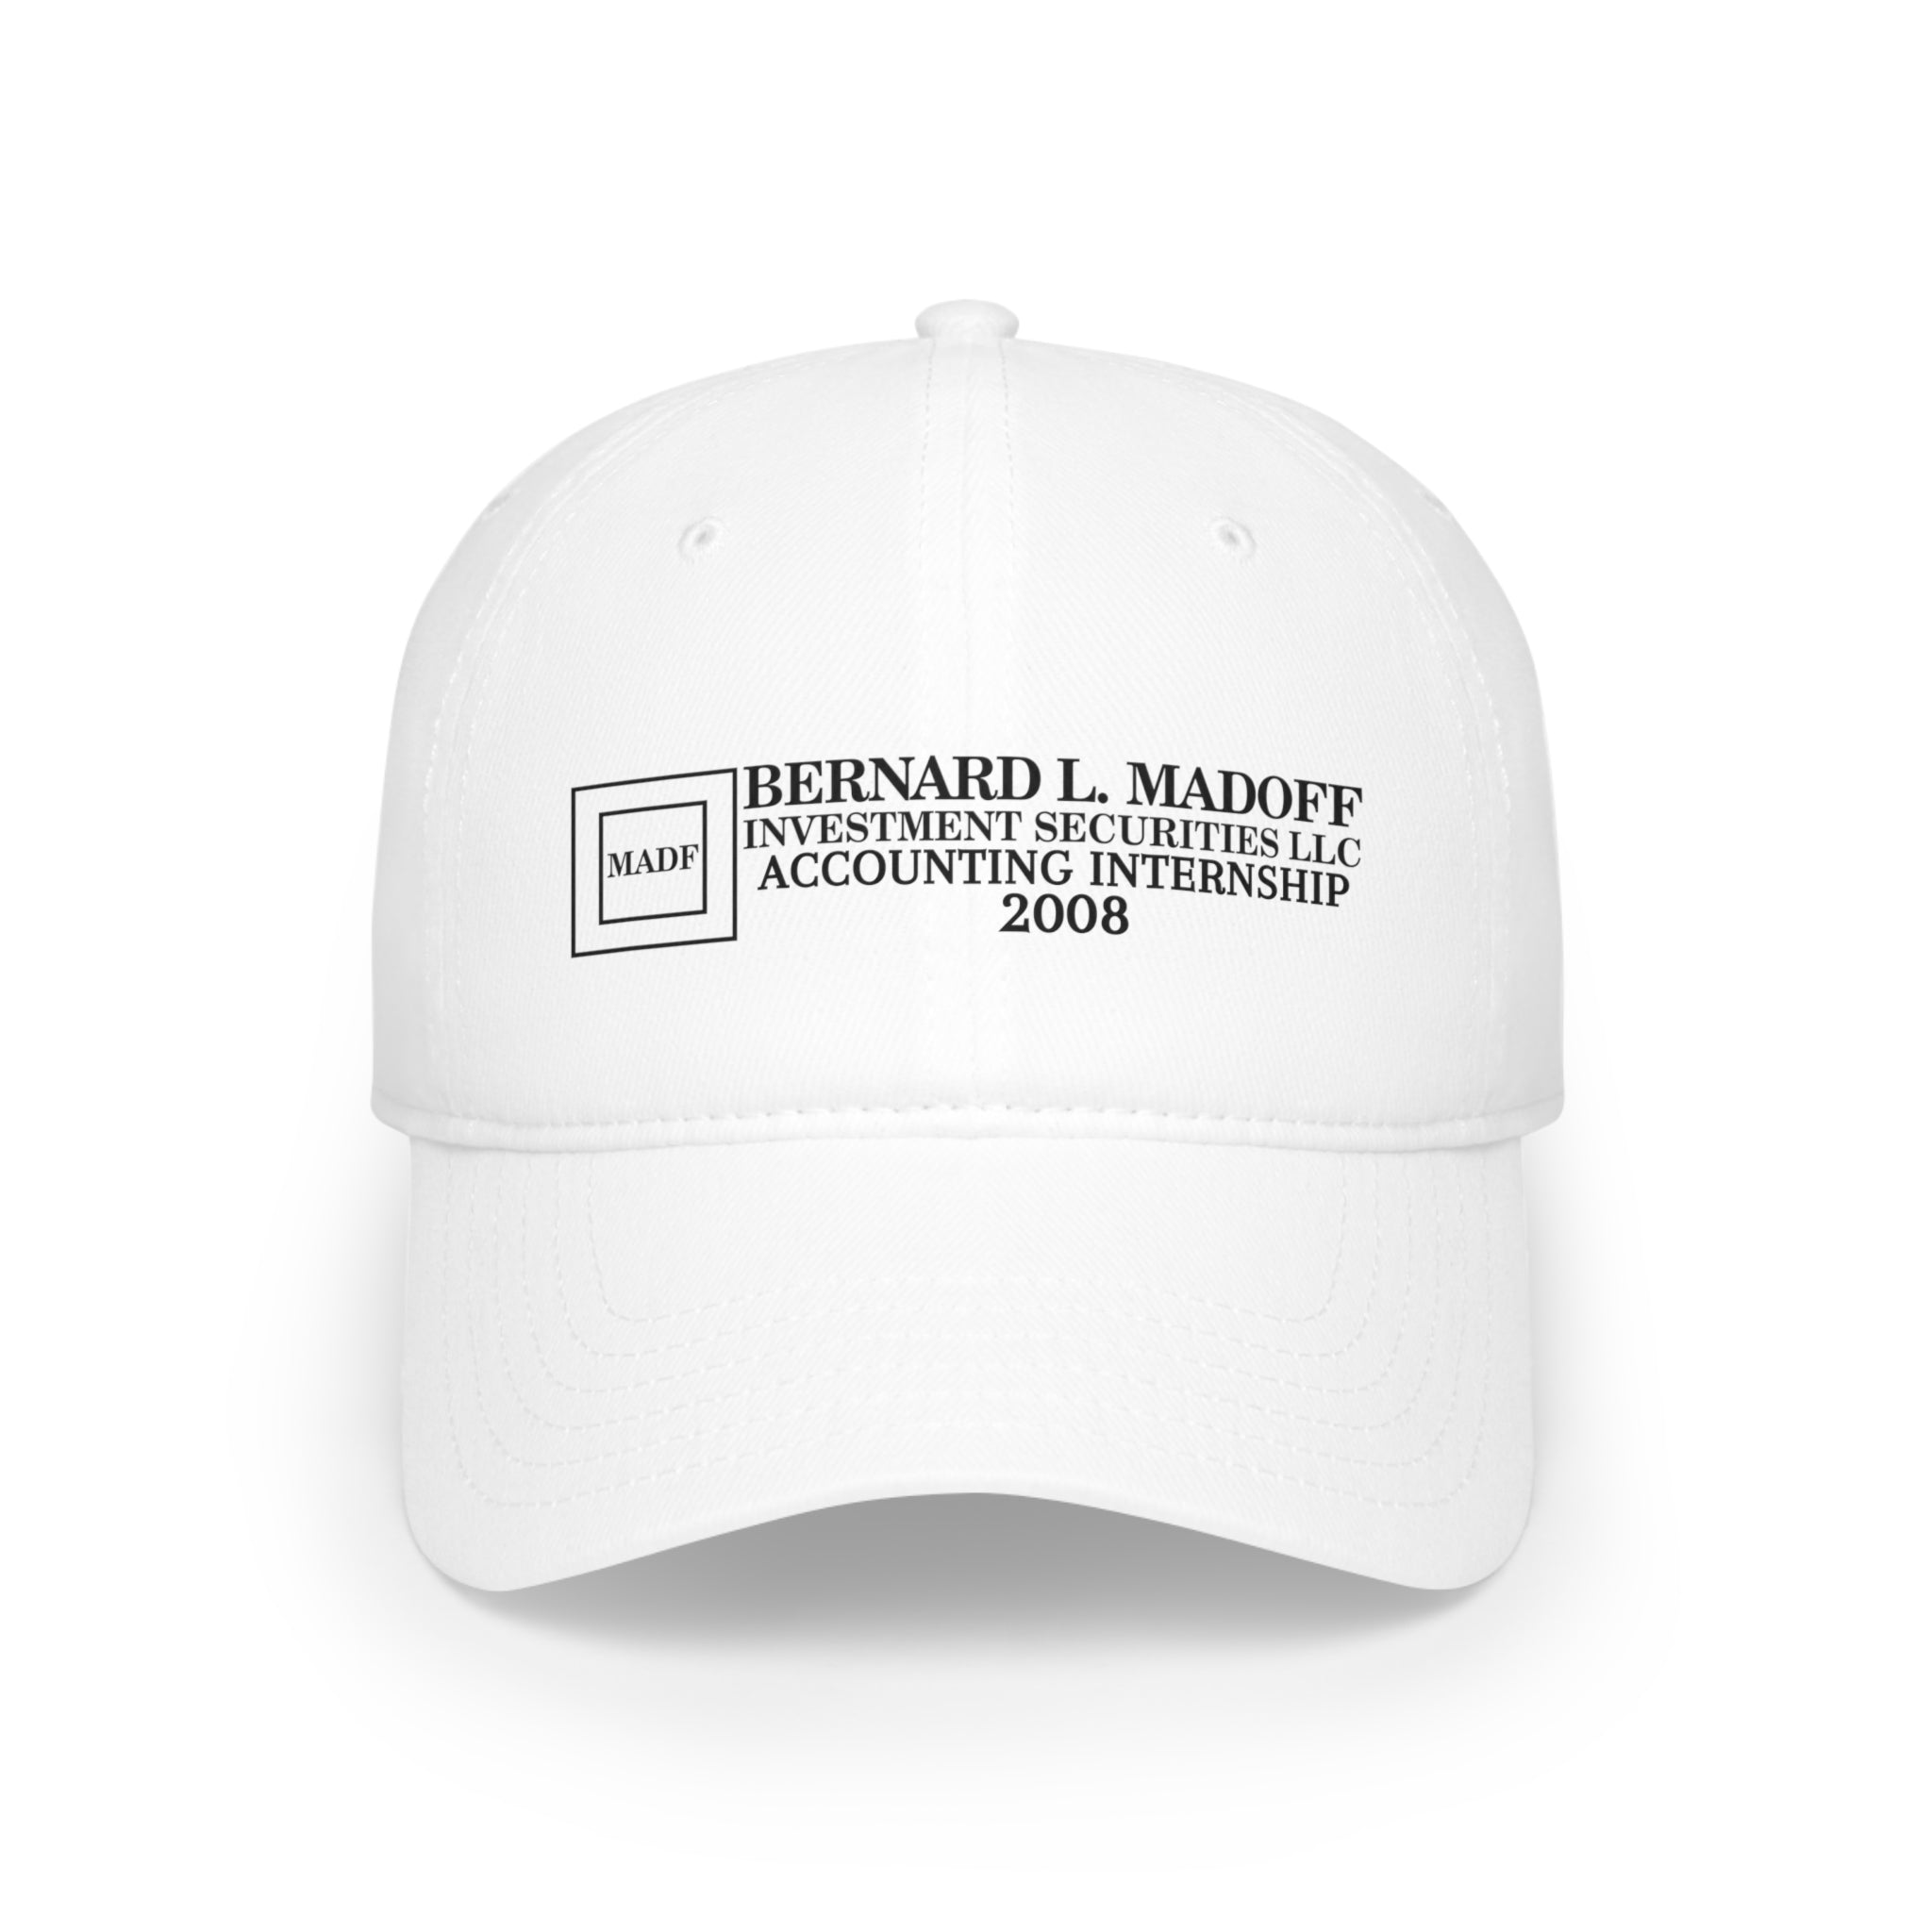 Bernie Madoff Accounting Internship 2008 - Hat